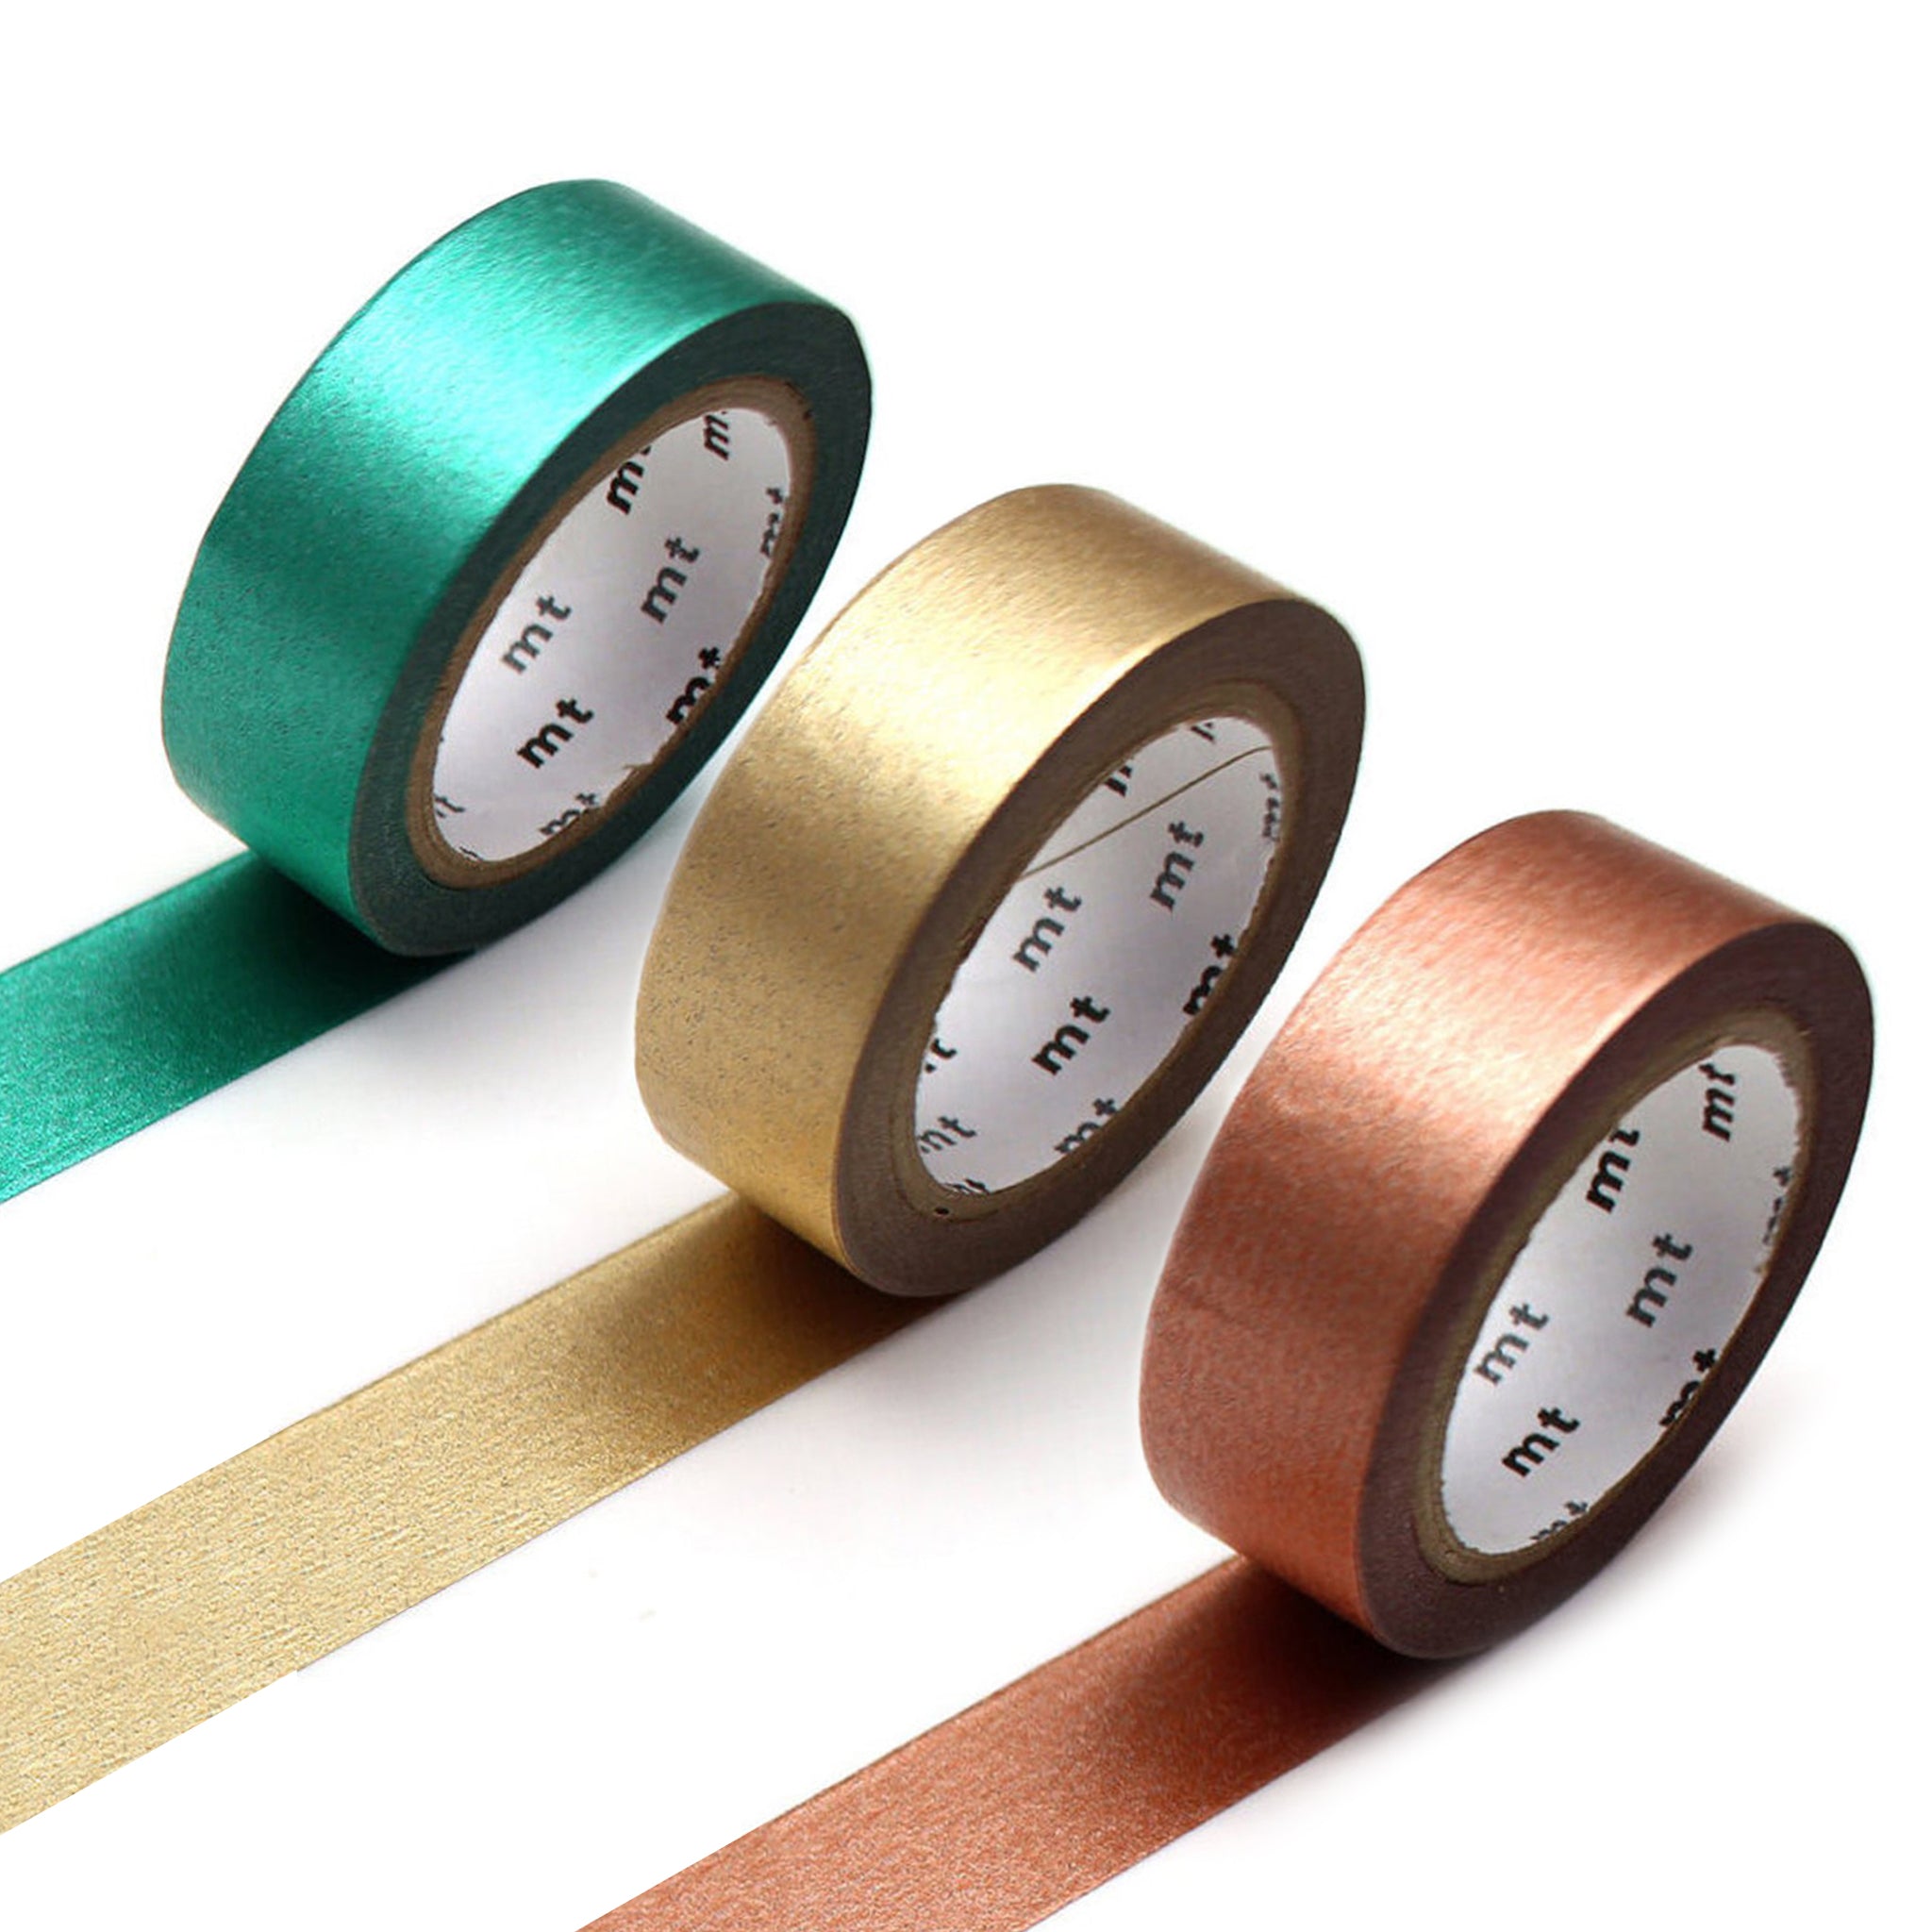 MT Solid Washi Tape Japanese Vibrant Colored Masking Tape